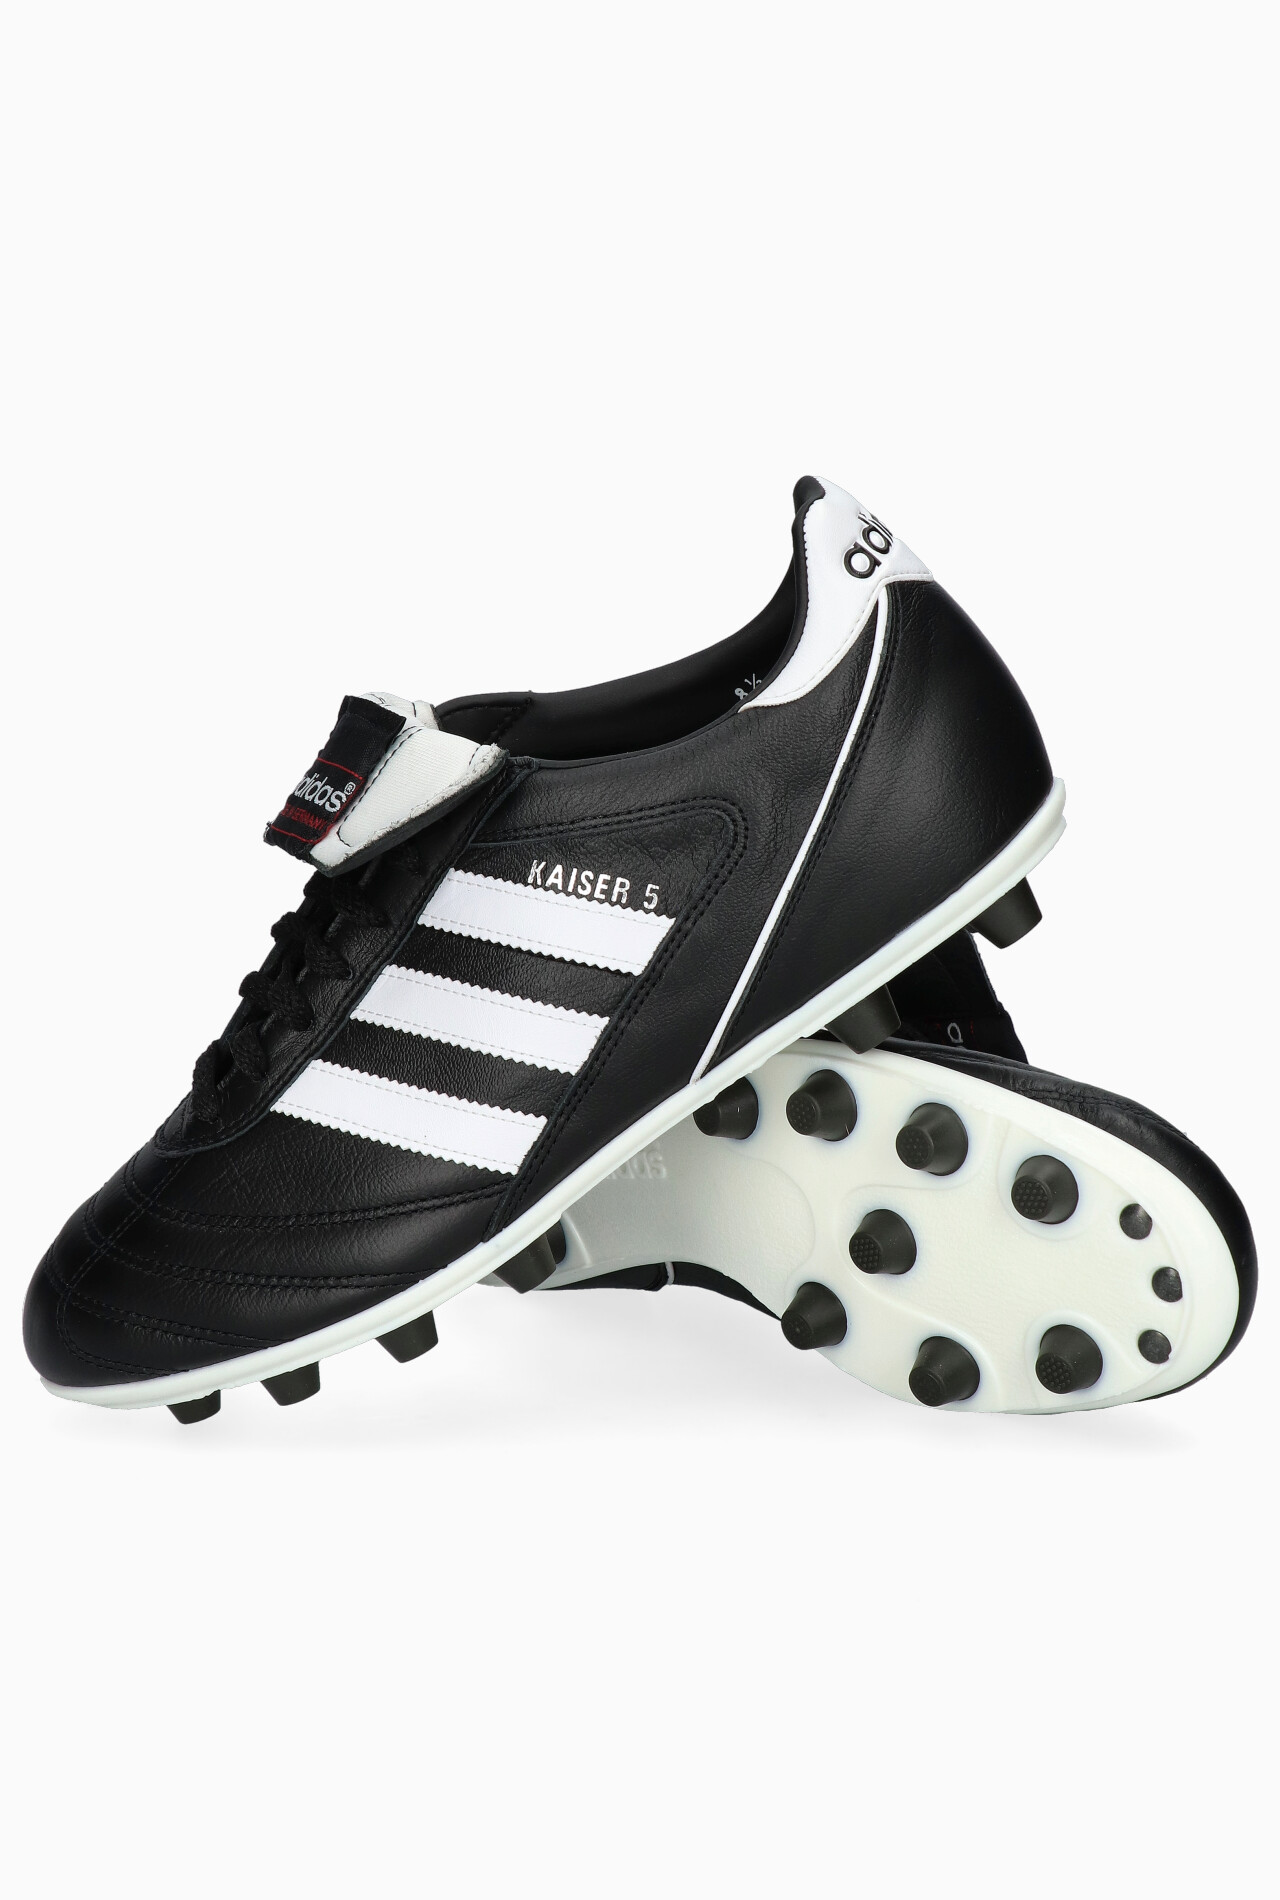 Cleats adidas Kaiser 5 Liga | R-GOL.com - Football boots \u0026 equipment